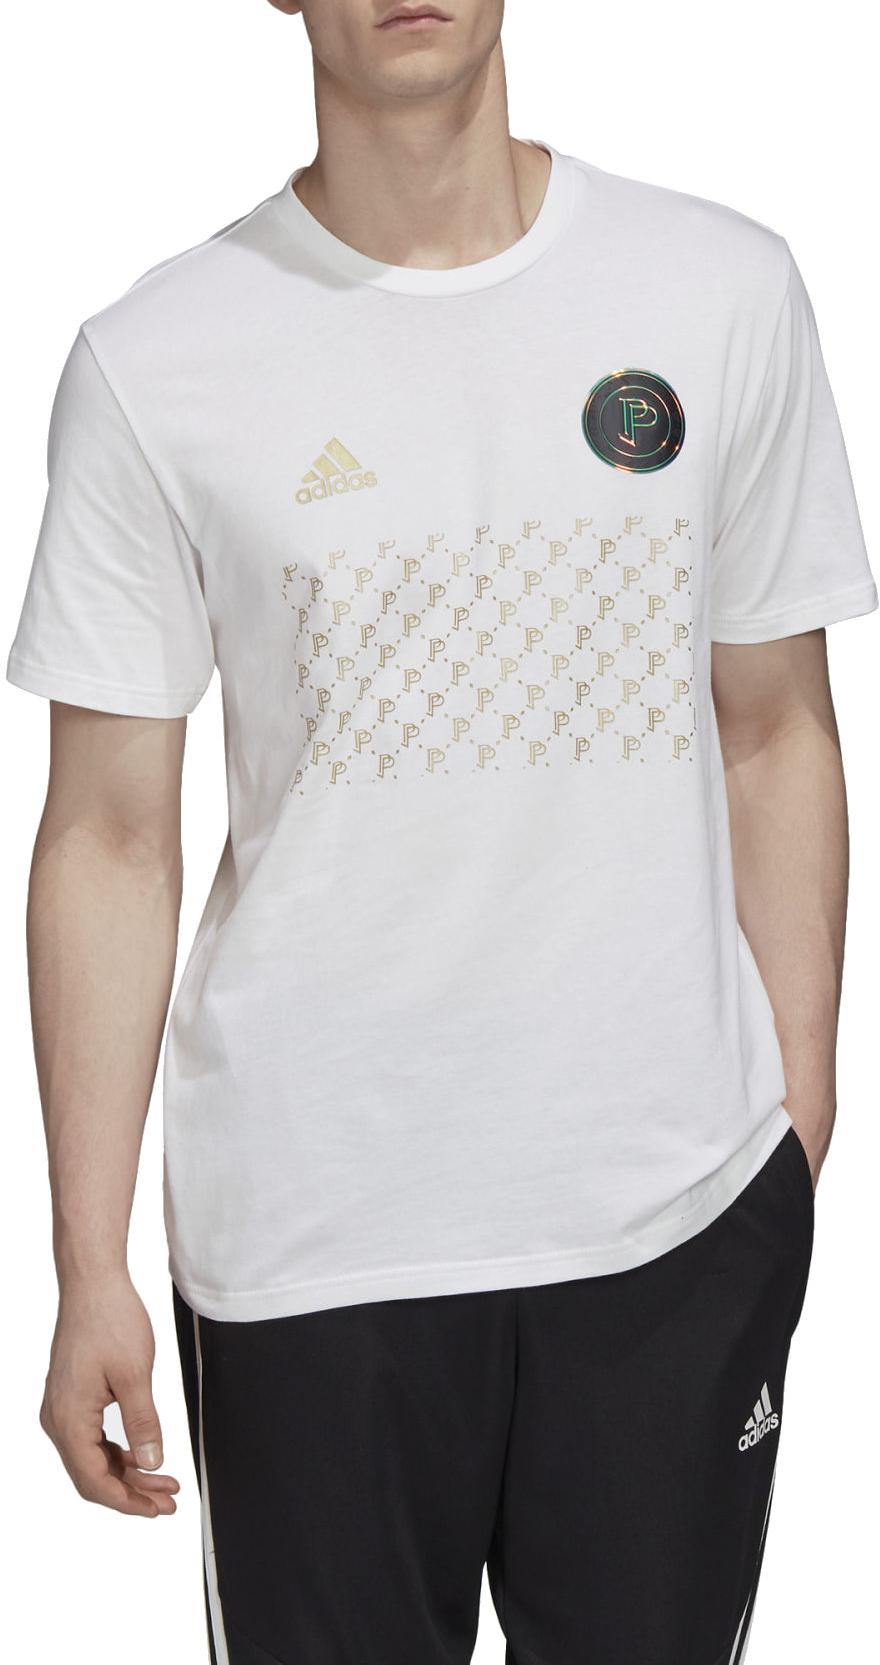 Majica adidas Paul Pogba Graphic T shirt